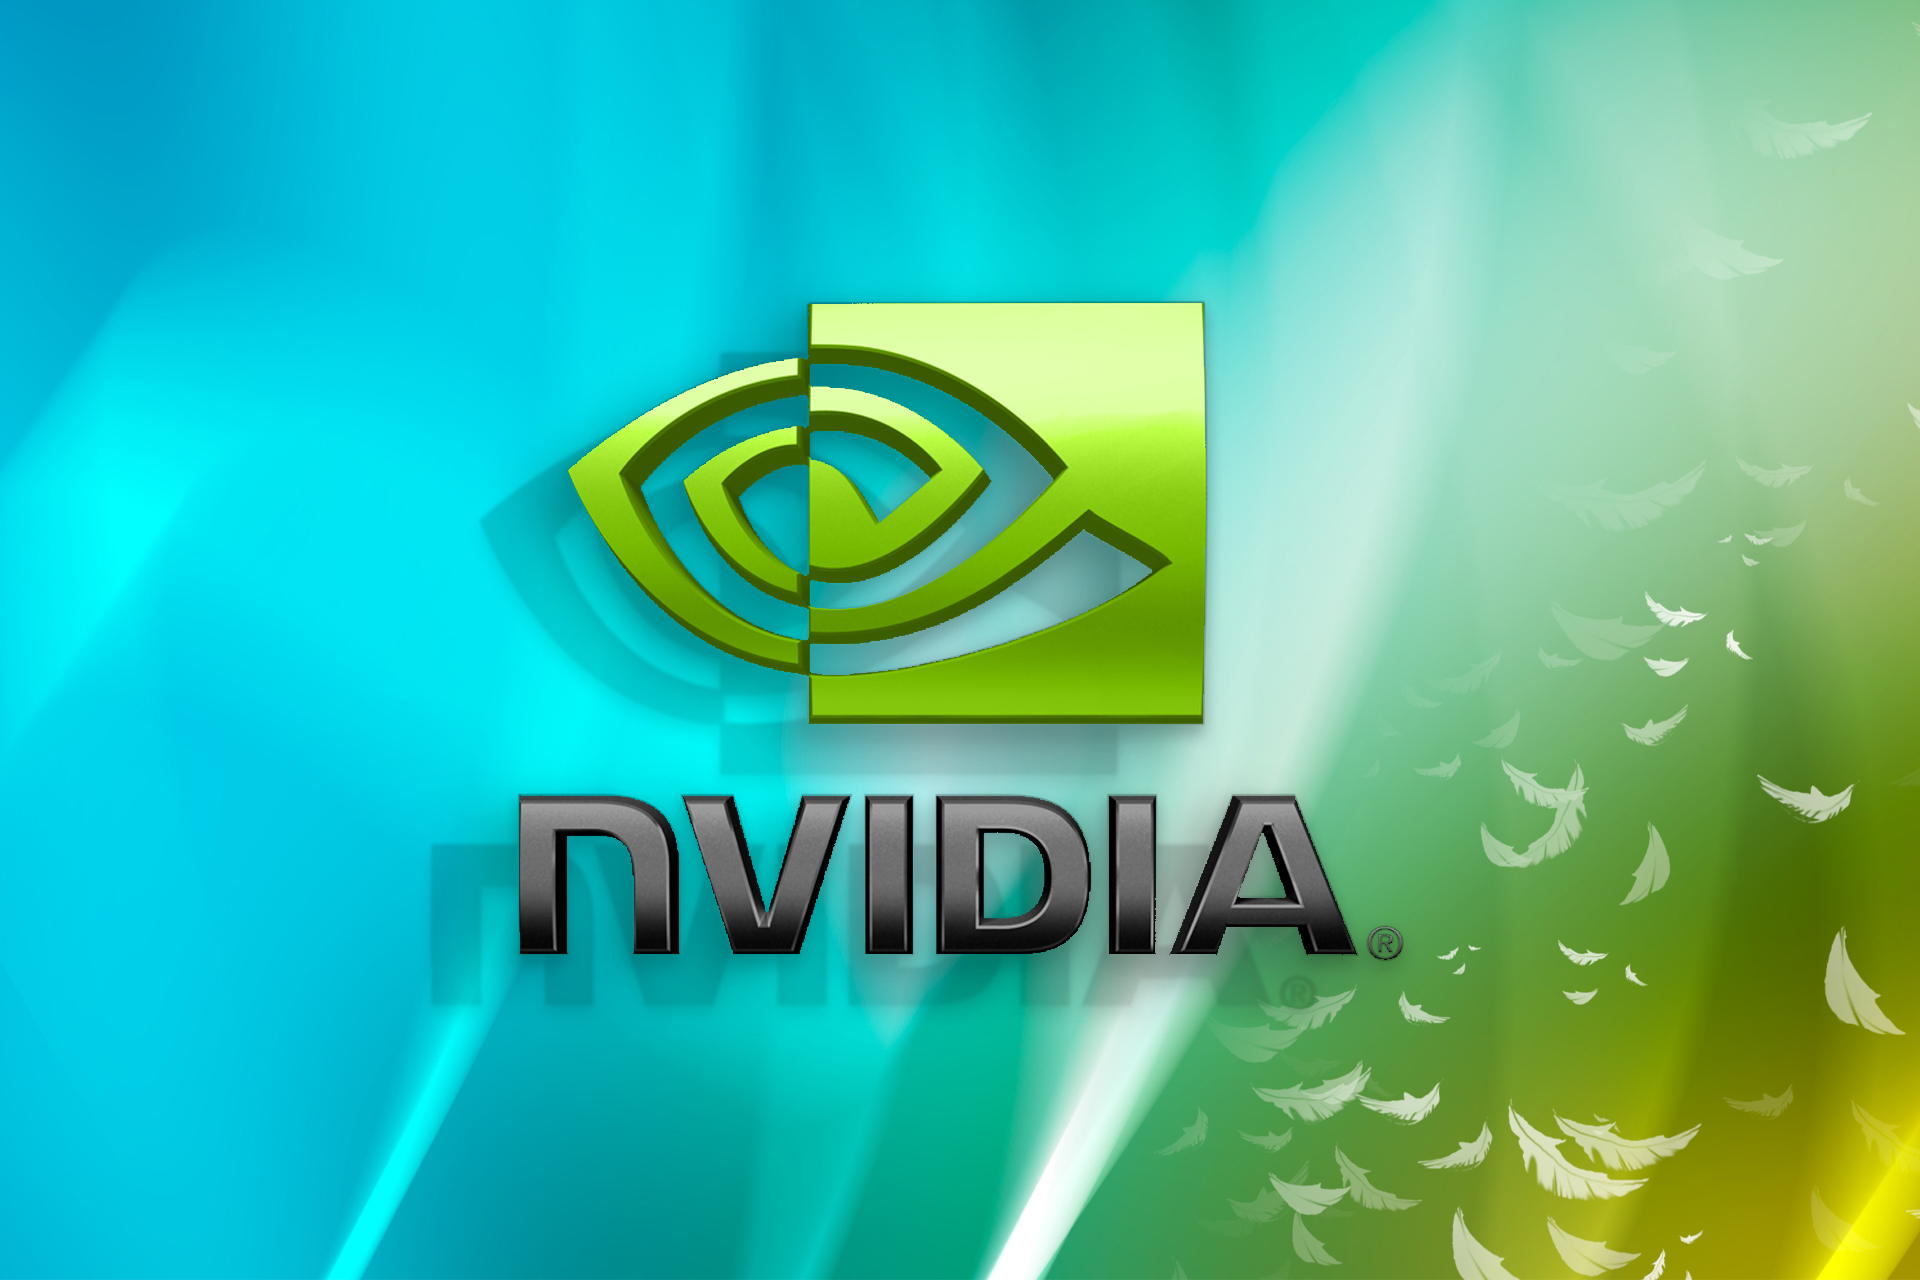 Nvidia global leader